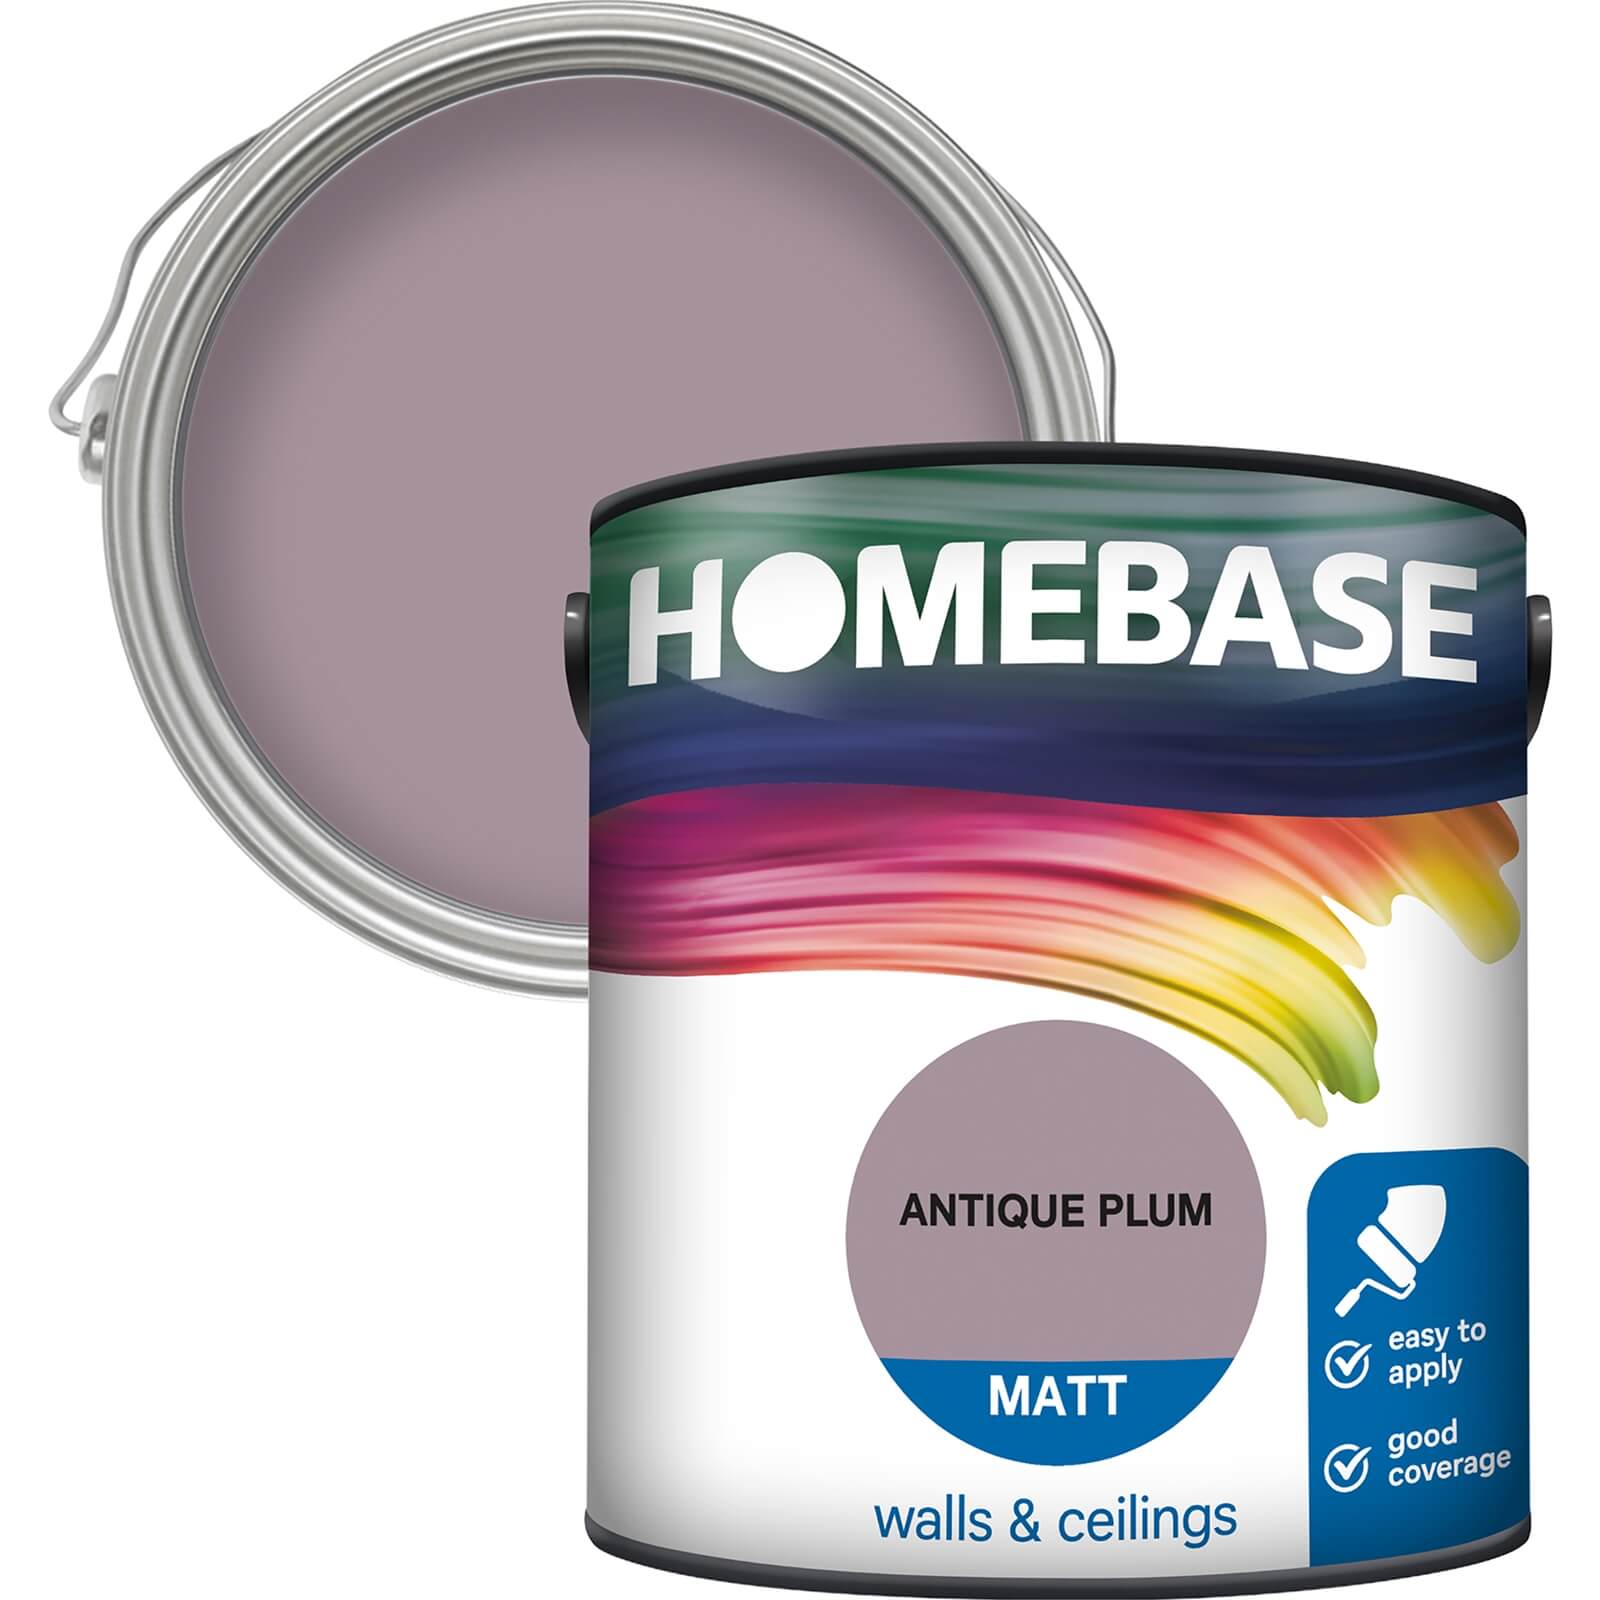 Homebase Matt Emulsion Paint Antique Plum - 2.5L